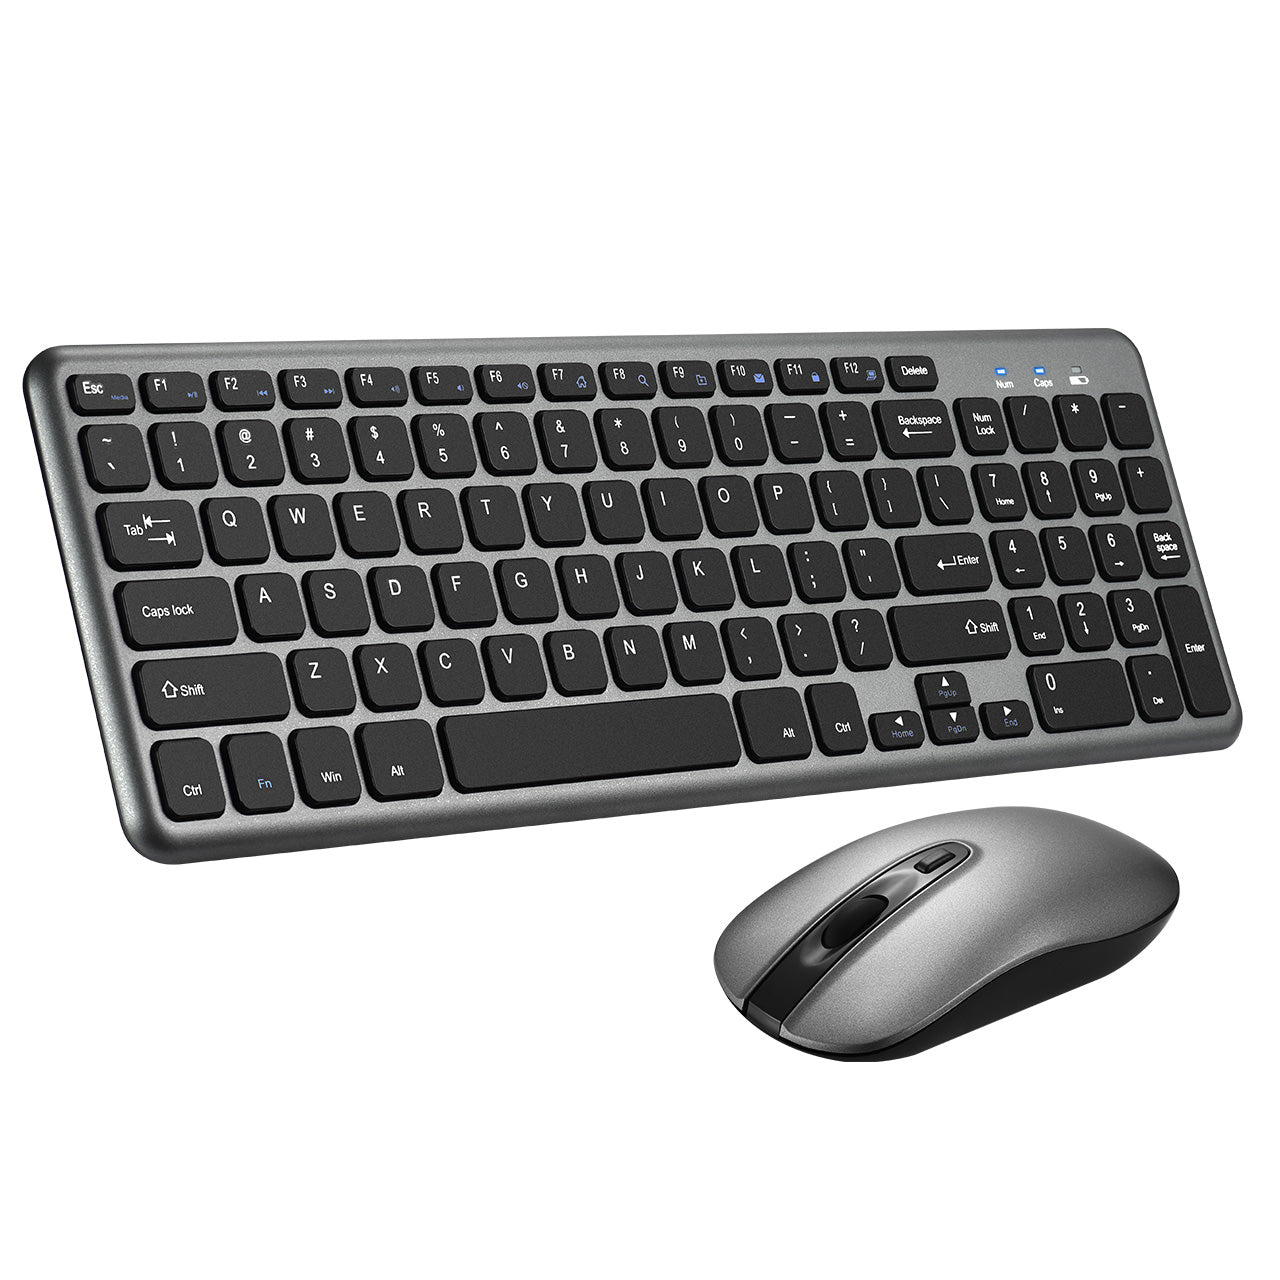 Pictek 2.4G 98-Key Keyboard with Mute Mouse for PC Desktop